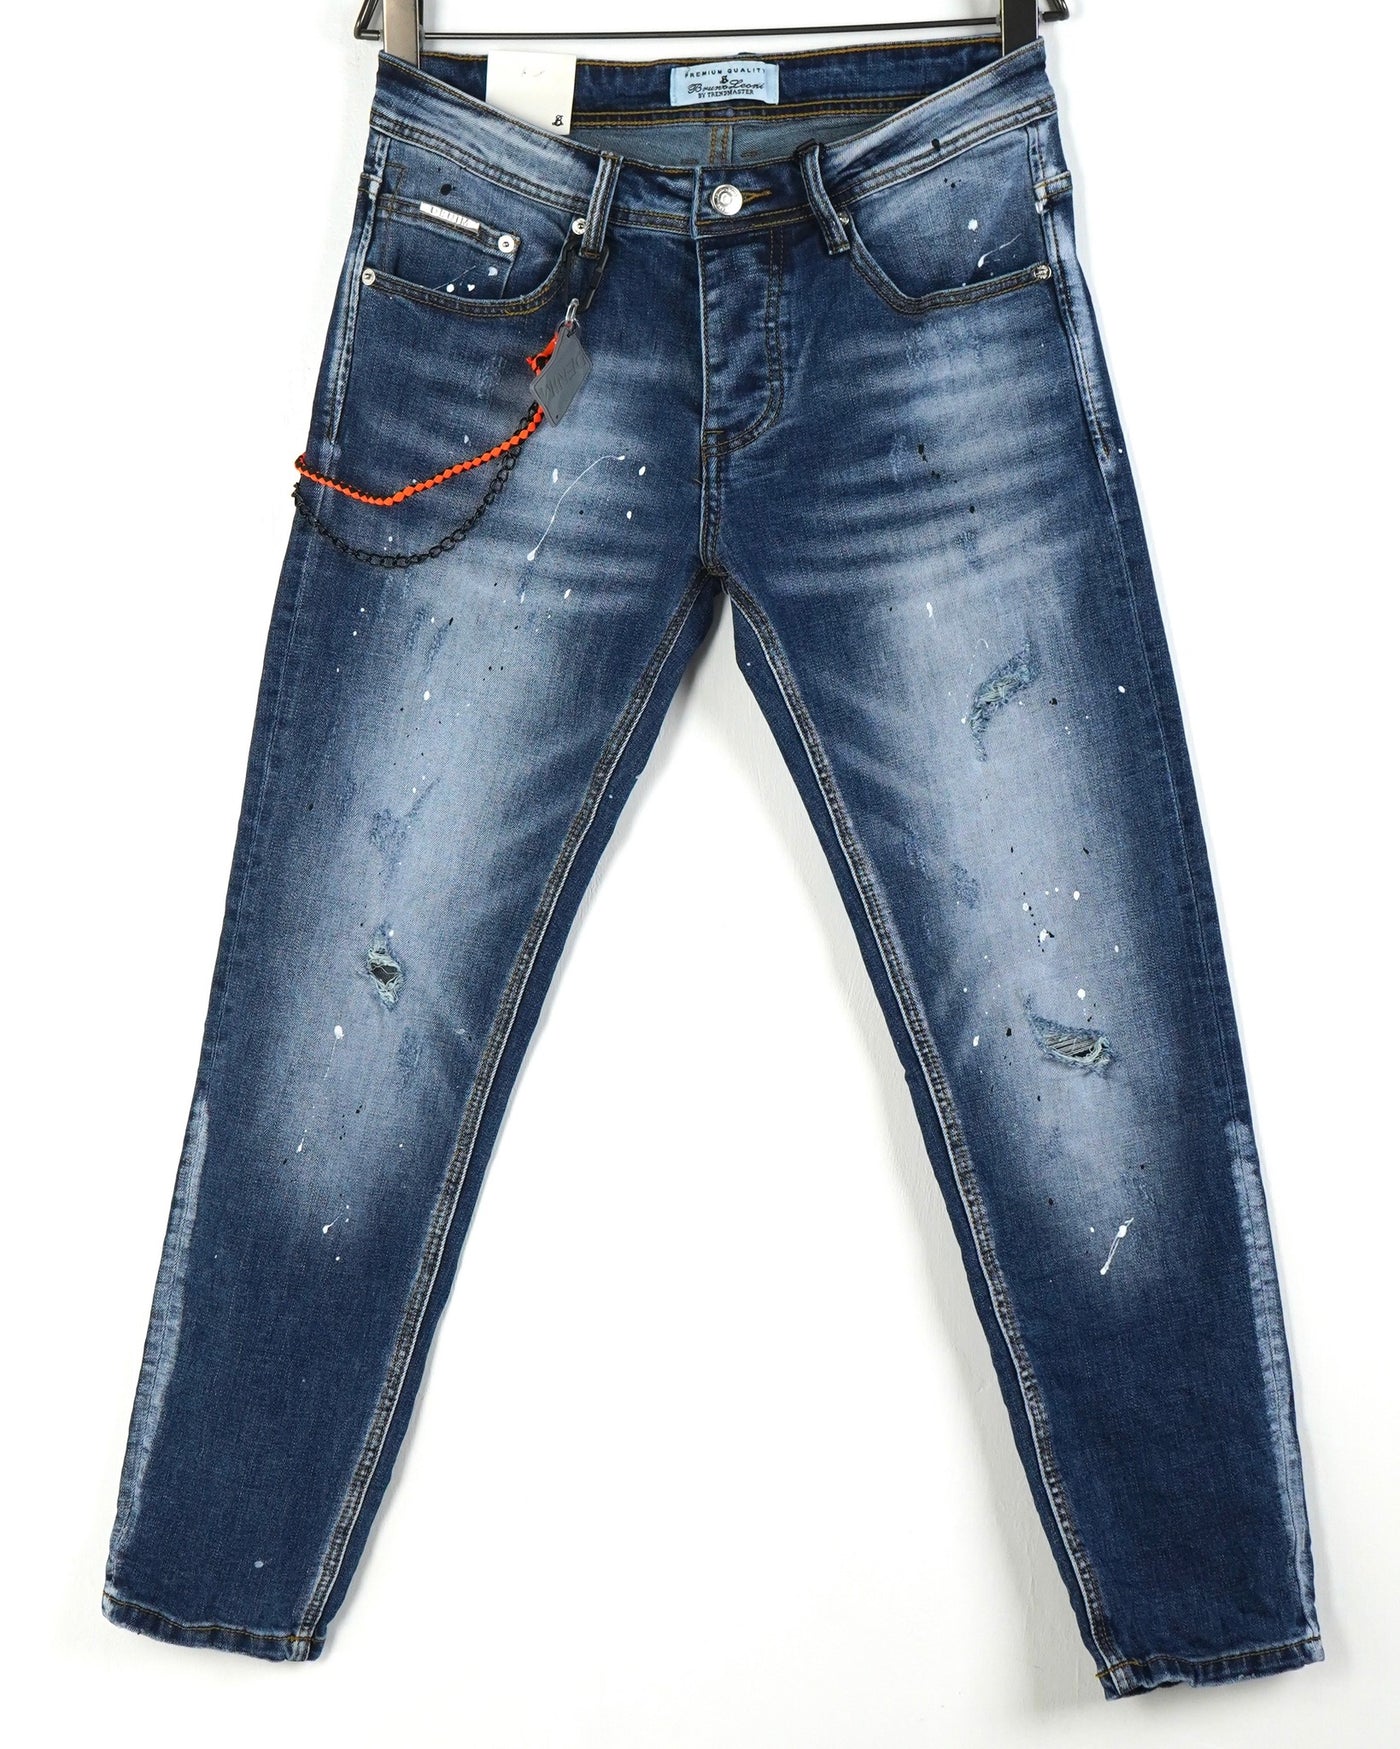 jeans anvip2367